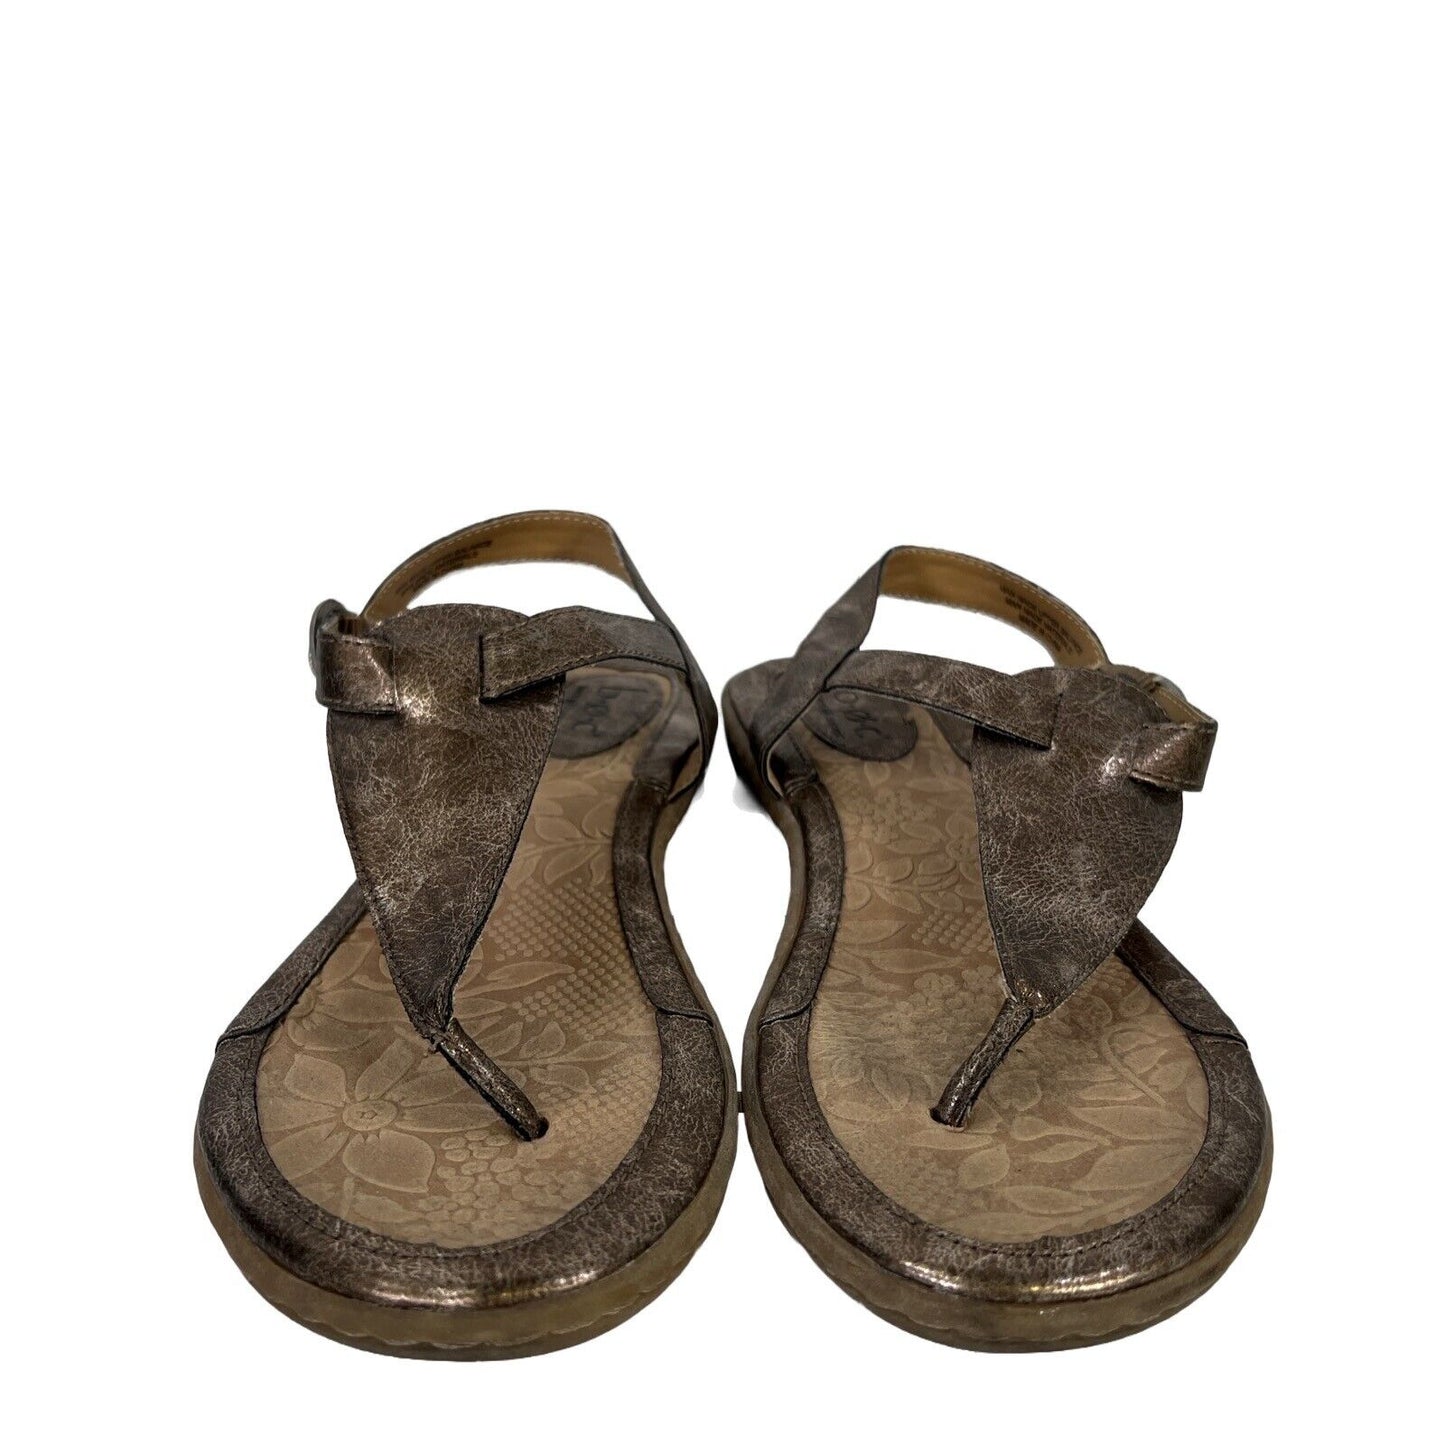 BOC Sandalias con tiras metálicas color bronce para mujer - 7